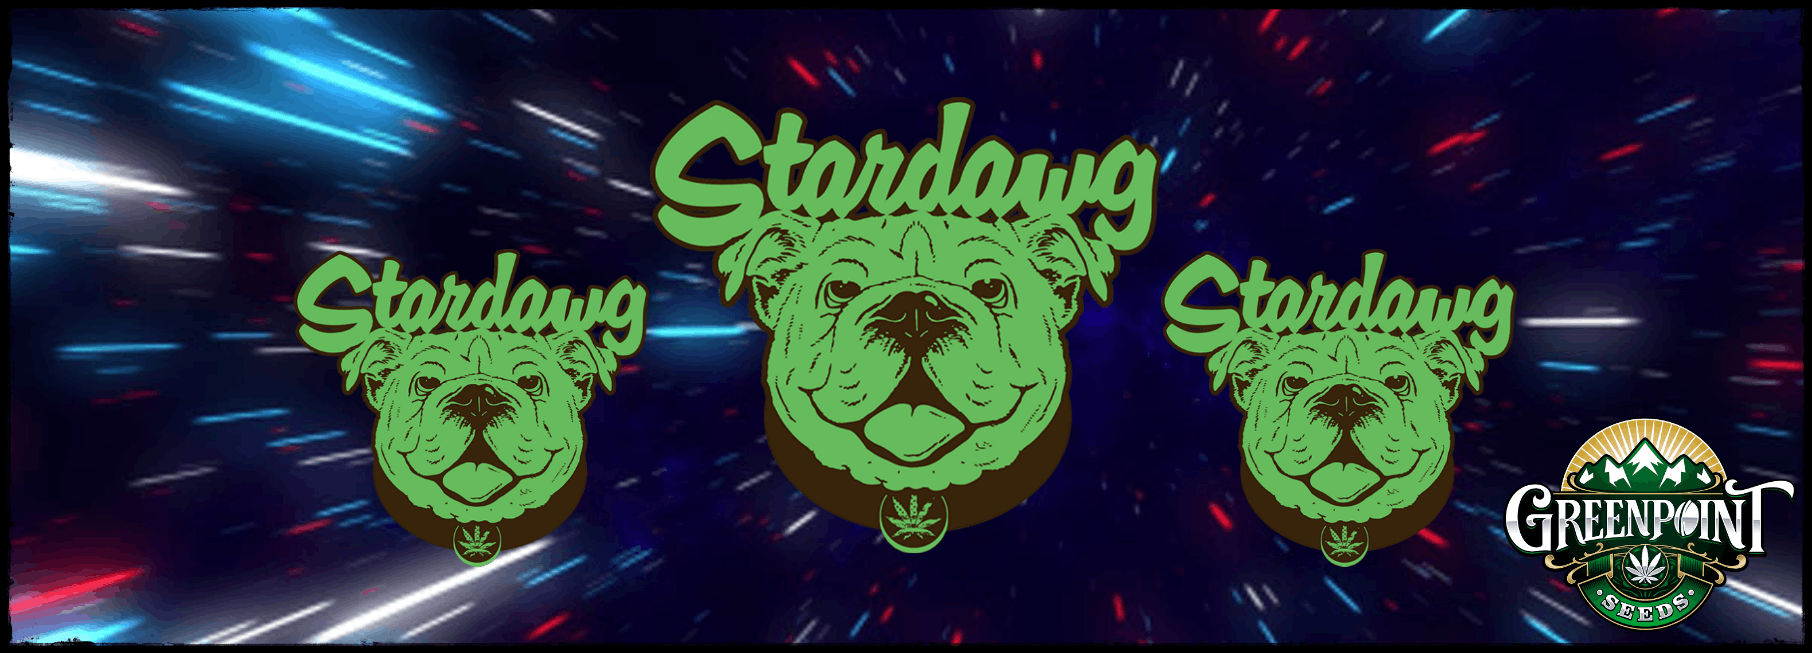 Stardawg Cannabis Strain